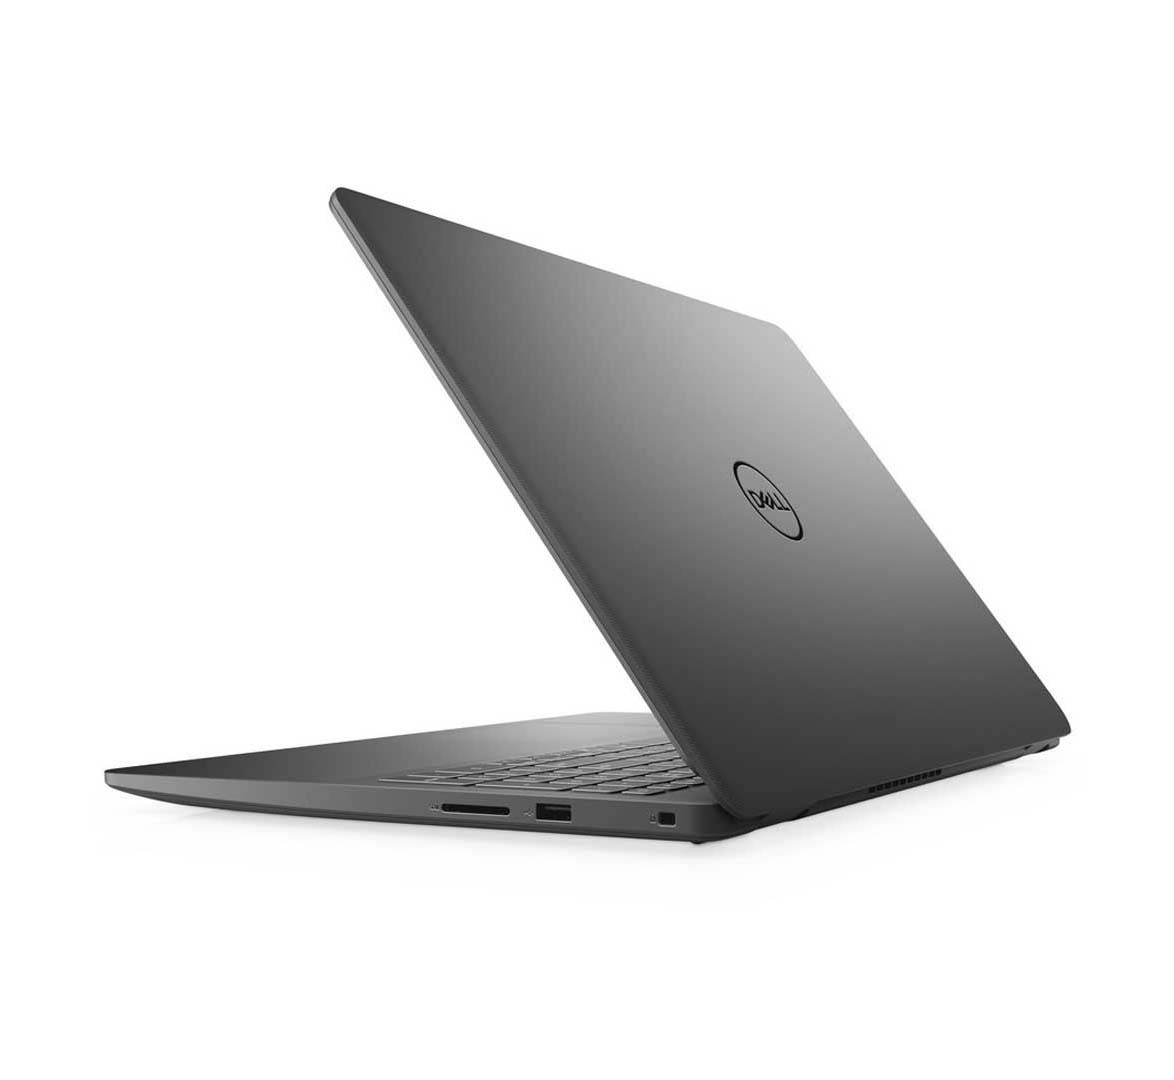 Dell Latitude 3500 Business Laptop, Intel Core i5-8th Generation CPU, 8GB RAM, 256GB SSD, 15.4 inch Display, Windows 10 Pro